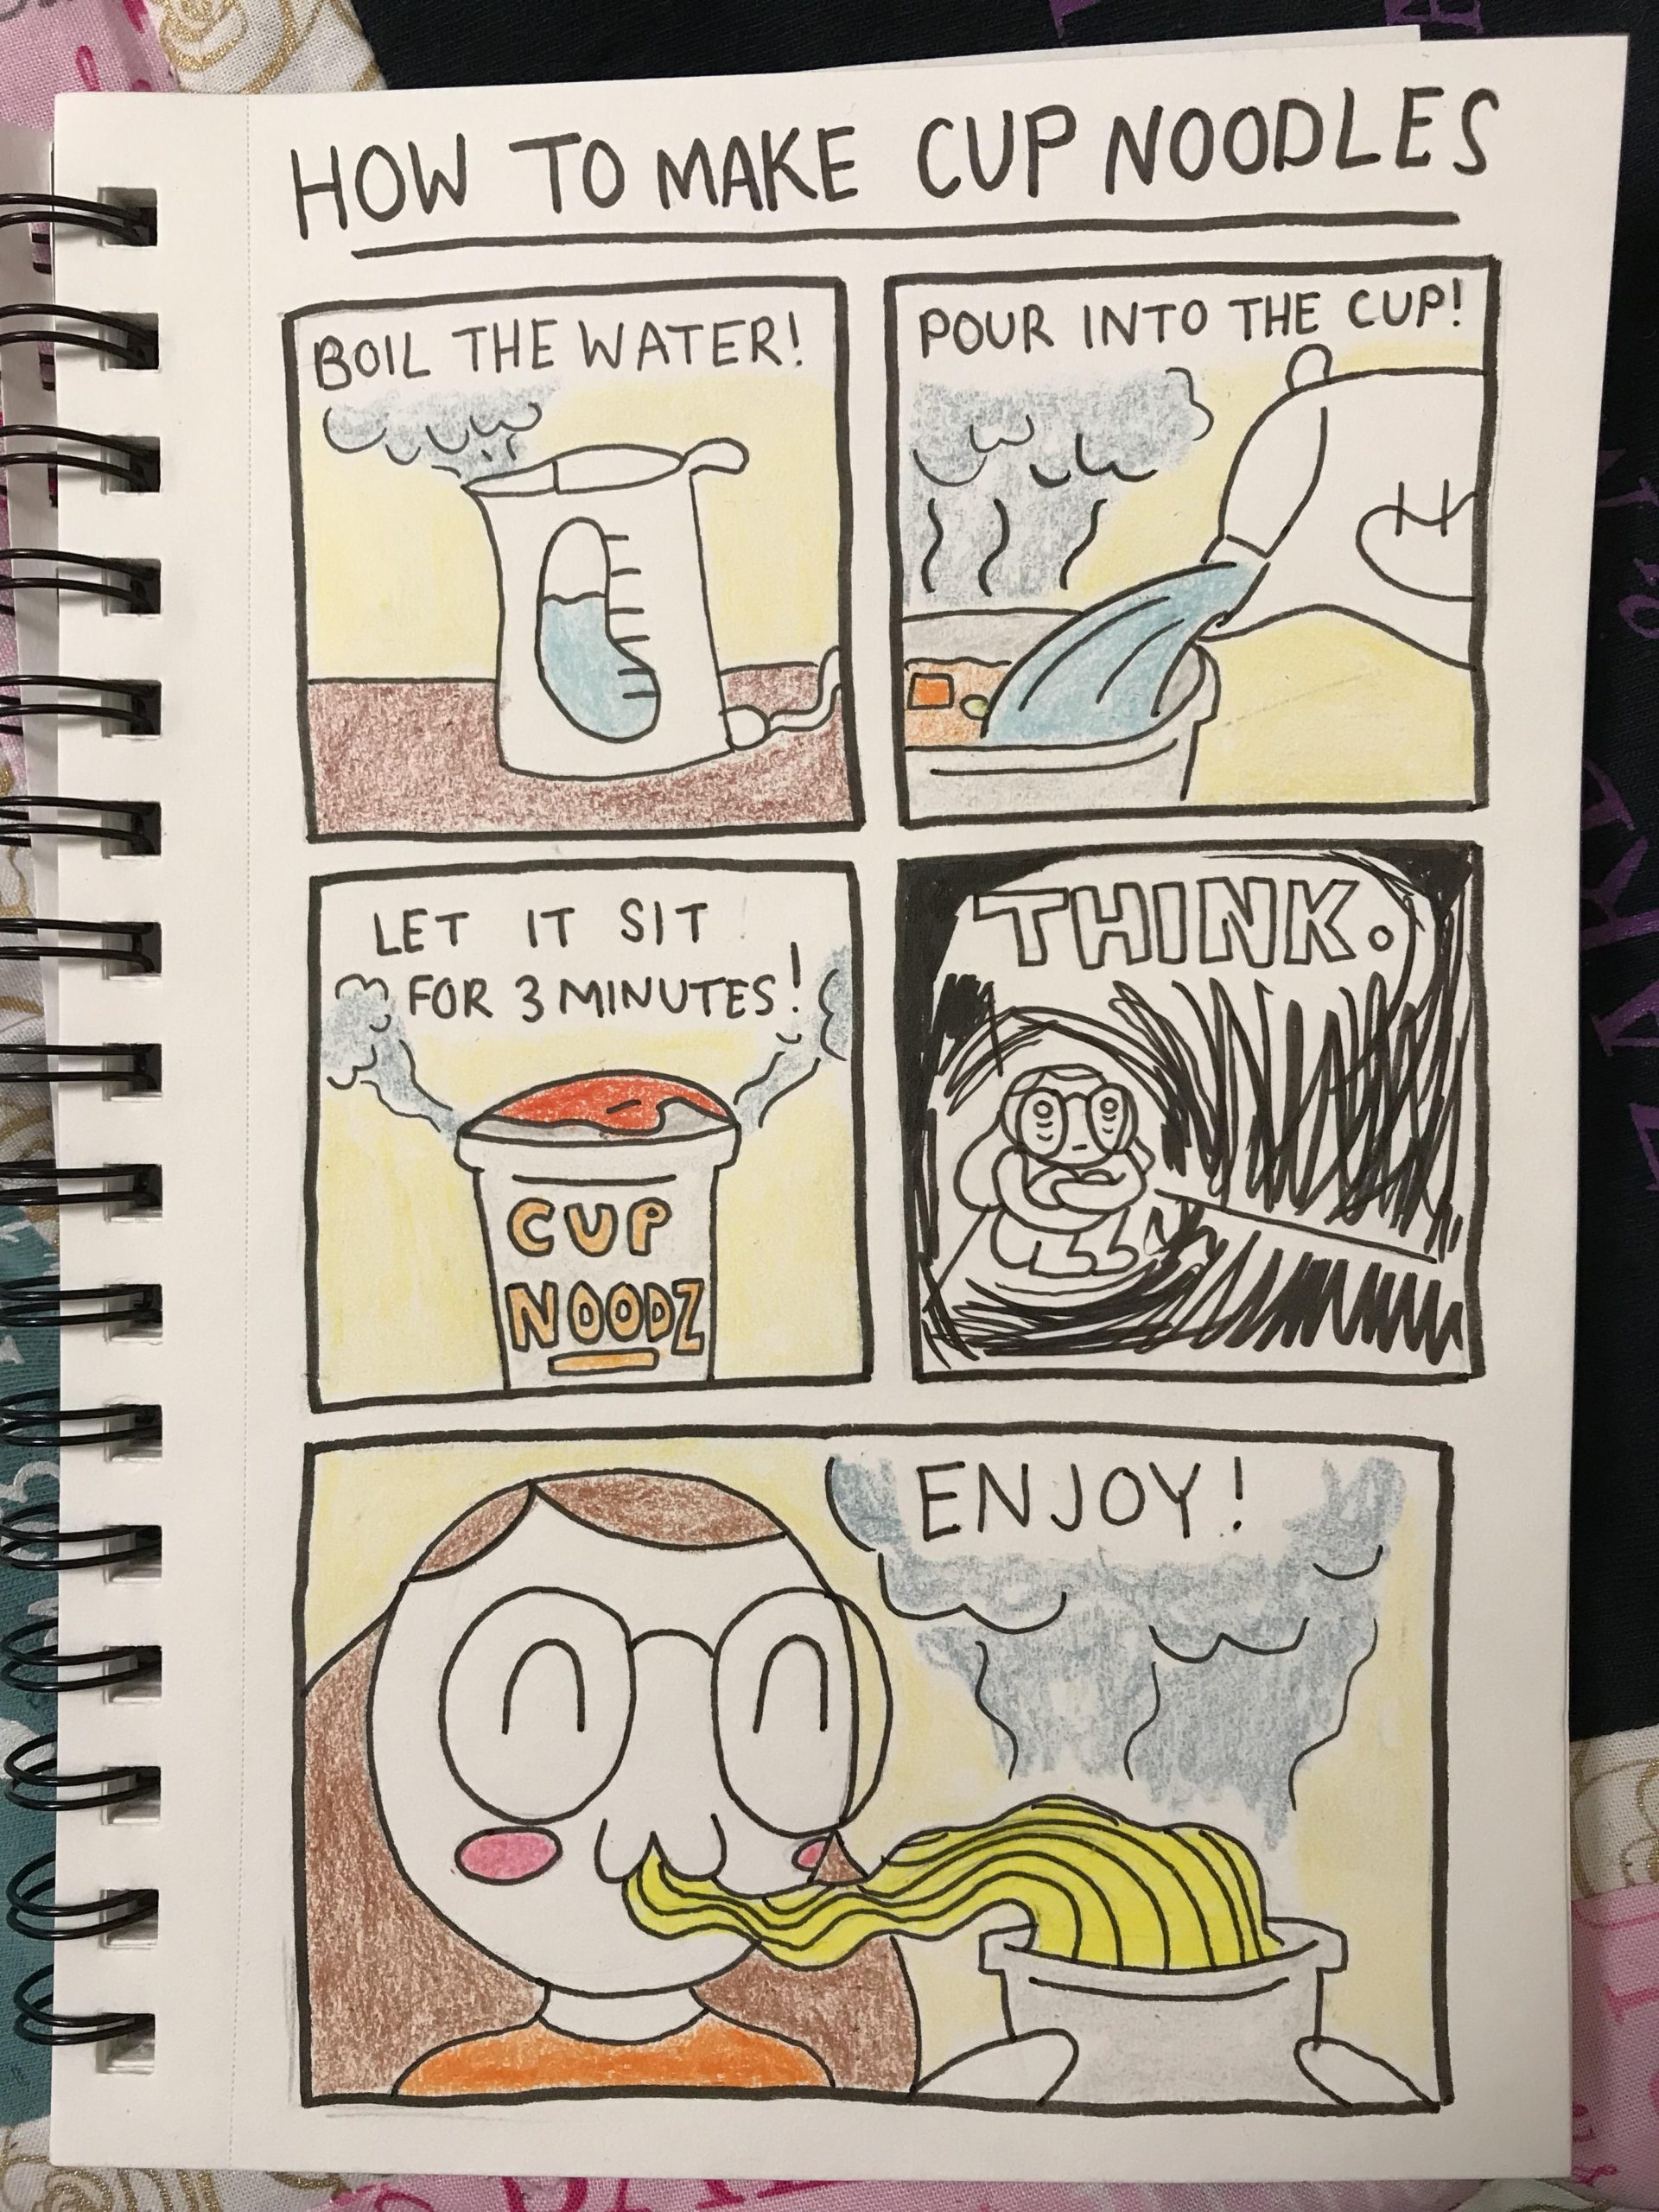 comics comics comics text: HOW TO MAKE BOIL THE WATER! LET IT S) T (ho FOR 3 MINUTES . cVP NOODLEC PovR INTO THE CUP! ENJoy I 